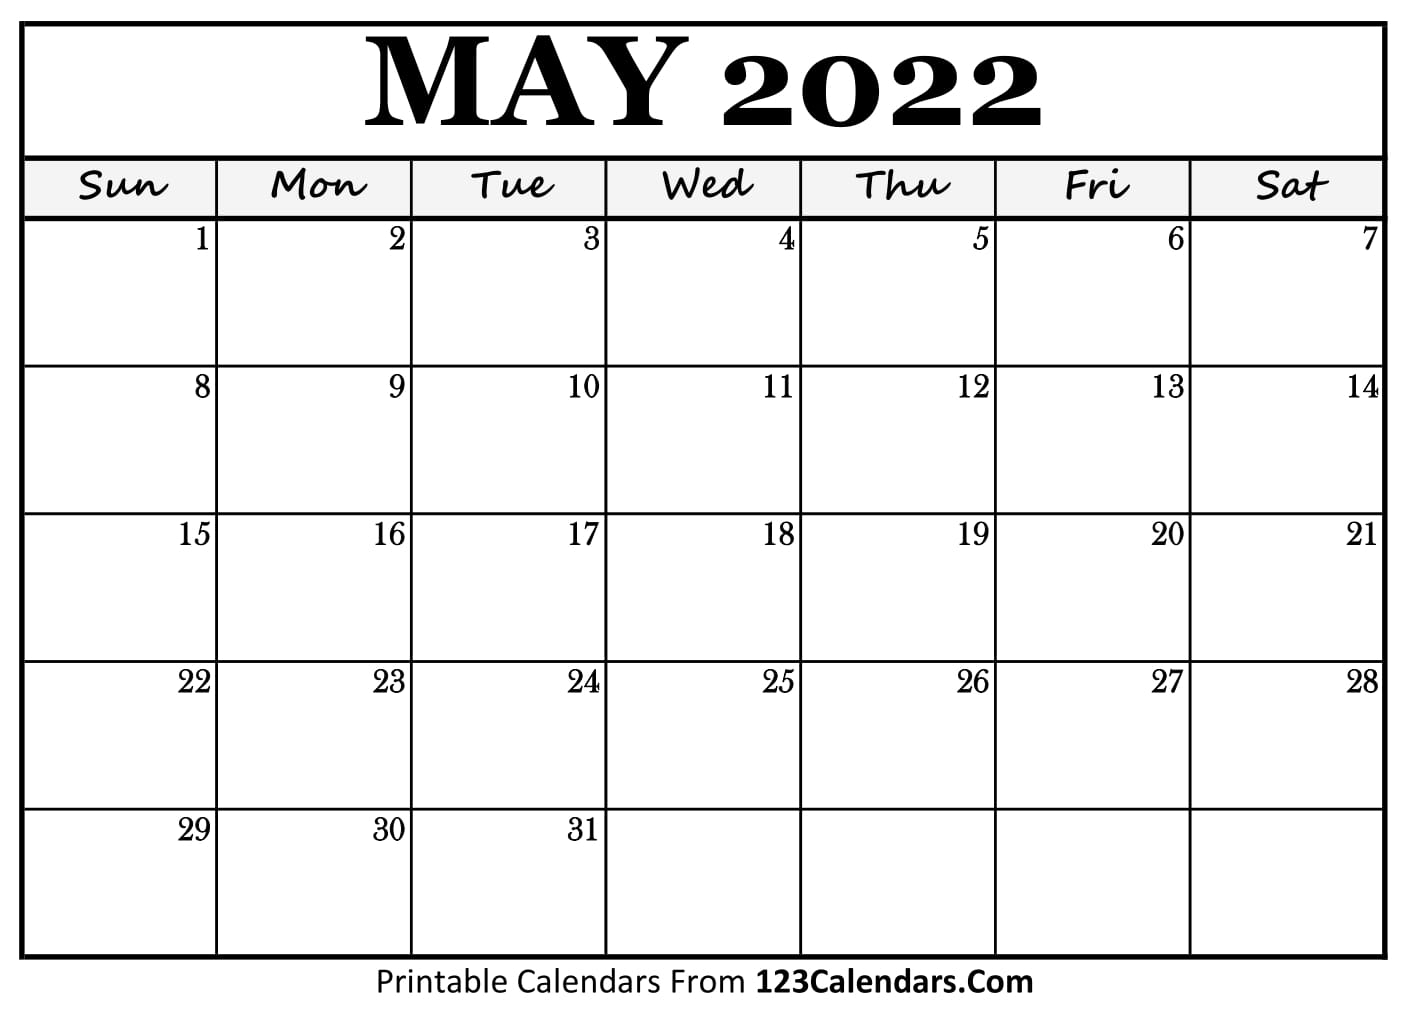 Print Calendar May 2022 Printable May 2022 Calendar Templates - 123Calendars.com